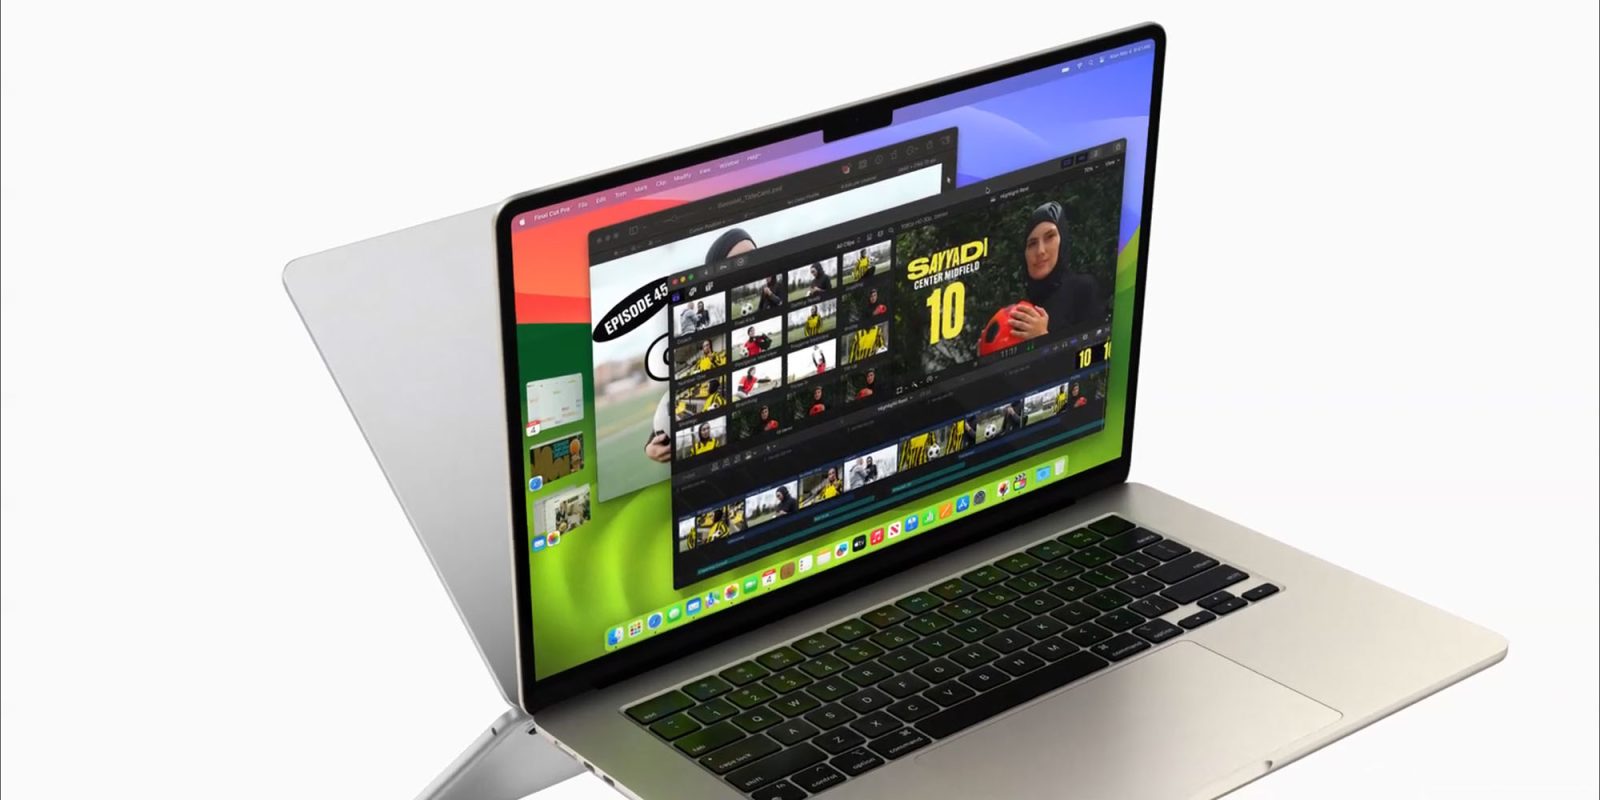 Buy an M3 MacBook Air | Apple promo image of both models